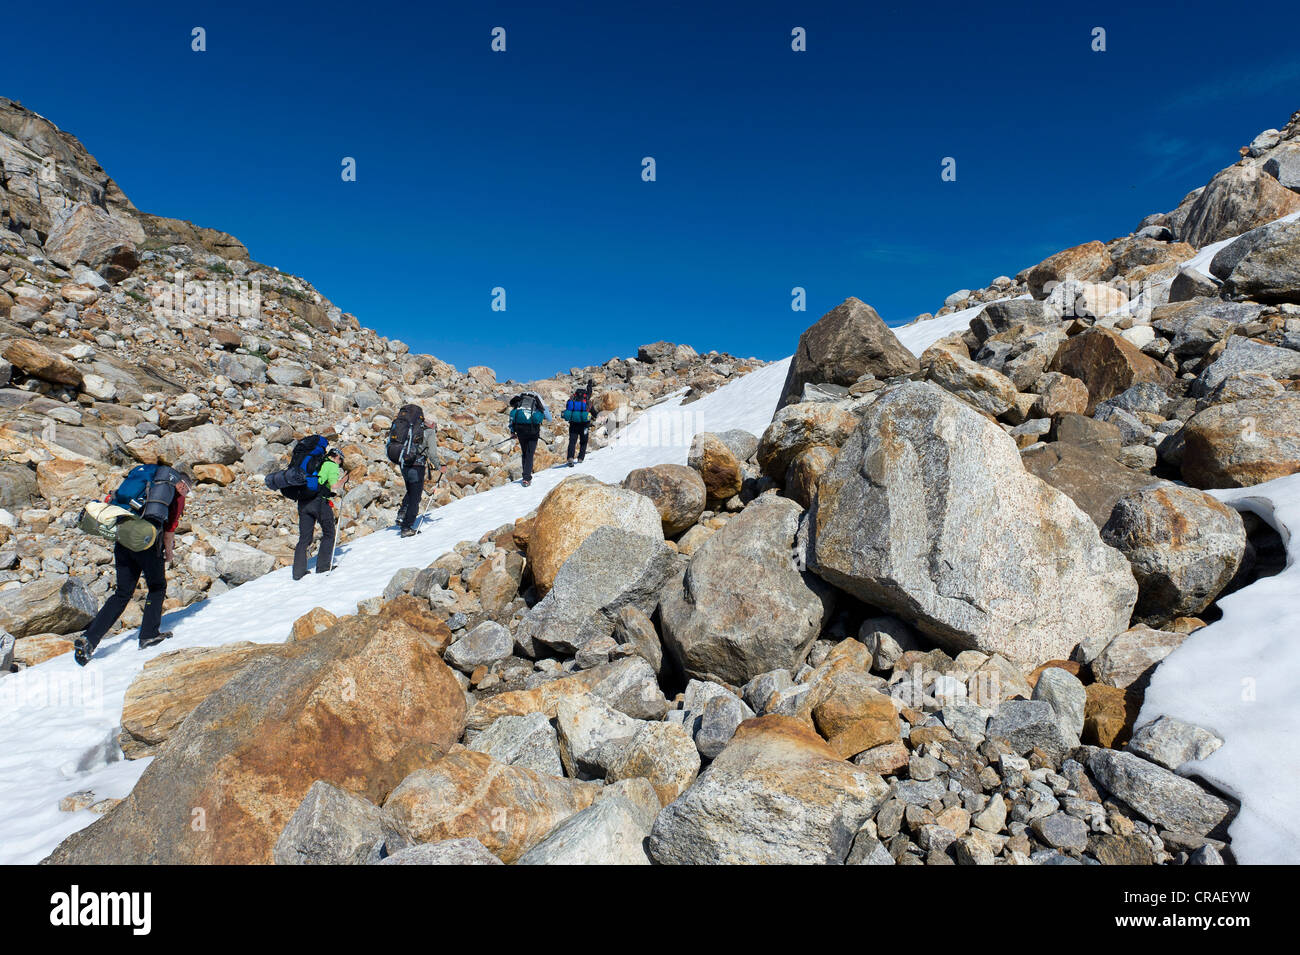 Field of snow and boulders, hikers at Mittivakkat Glacier, Ammassalik Peninsula, East Greenland, Greenland Stock Photo